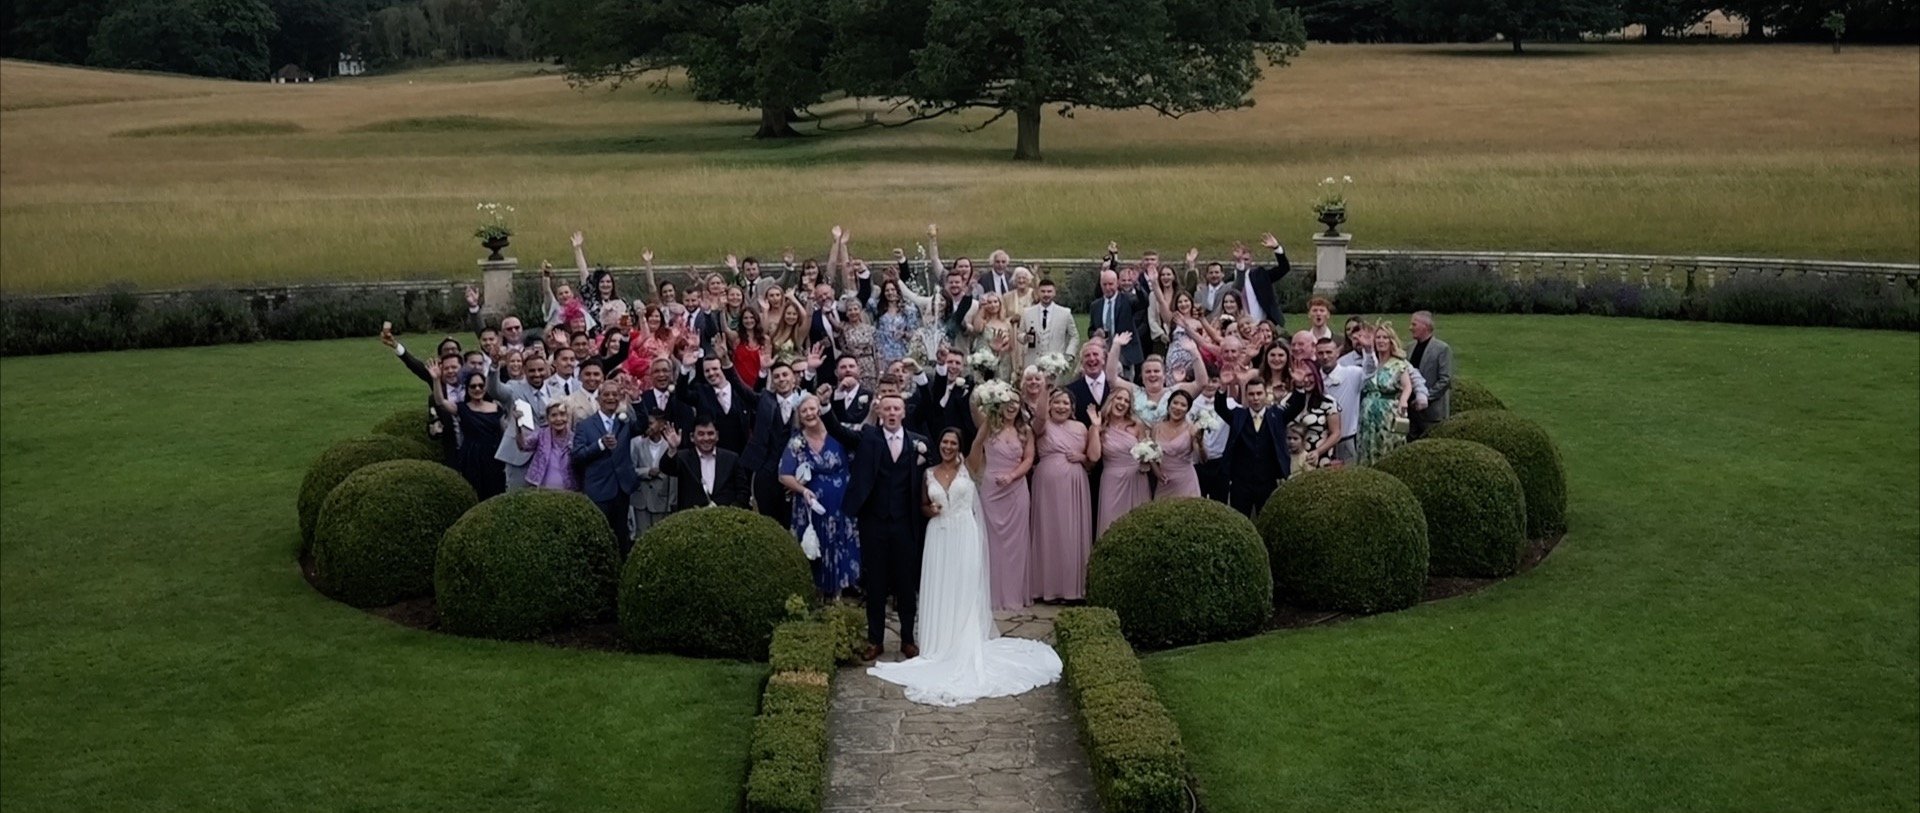 Essex wedding videos - Quendon Hall guests.jpg